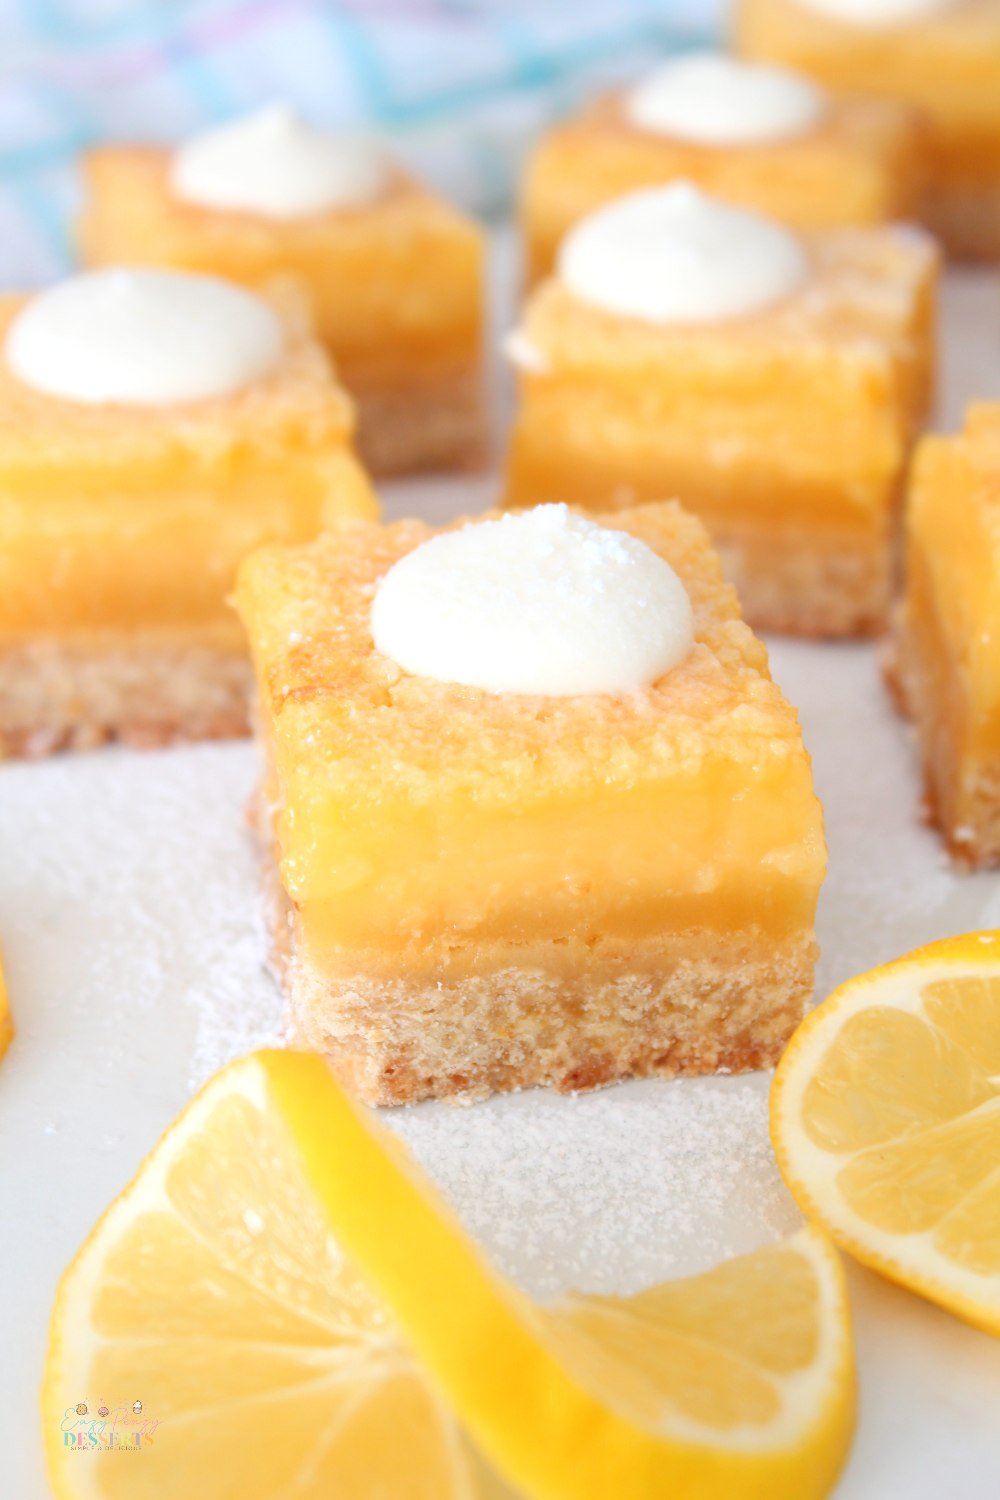 lemon dessert close up view